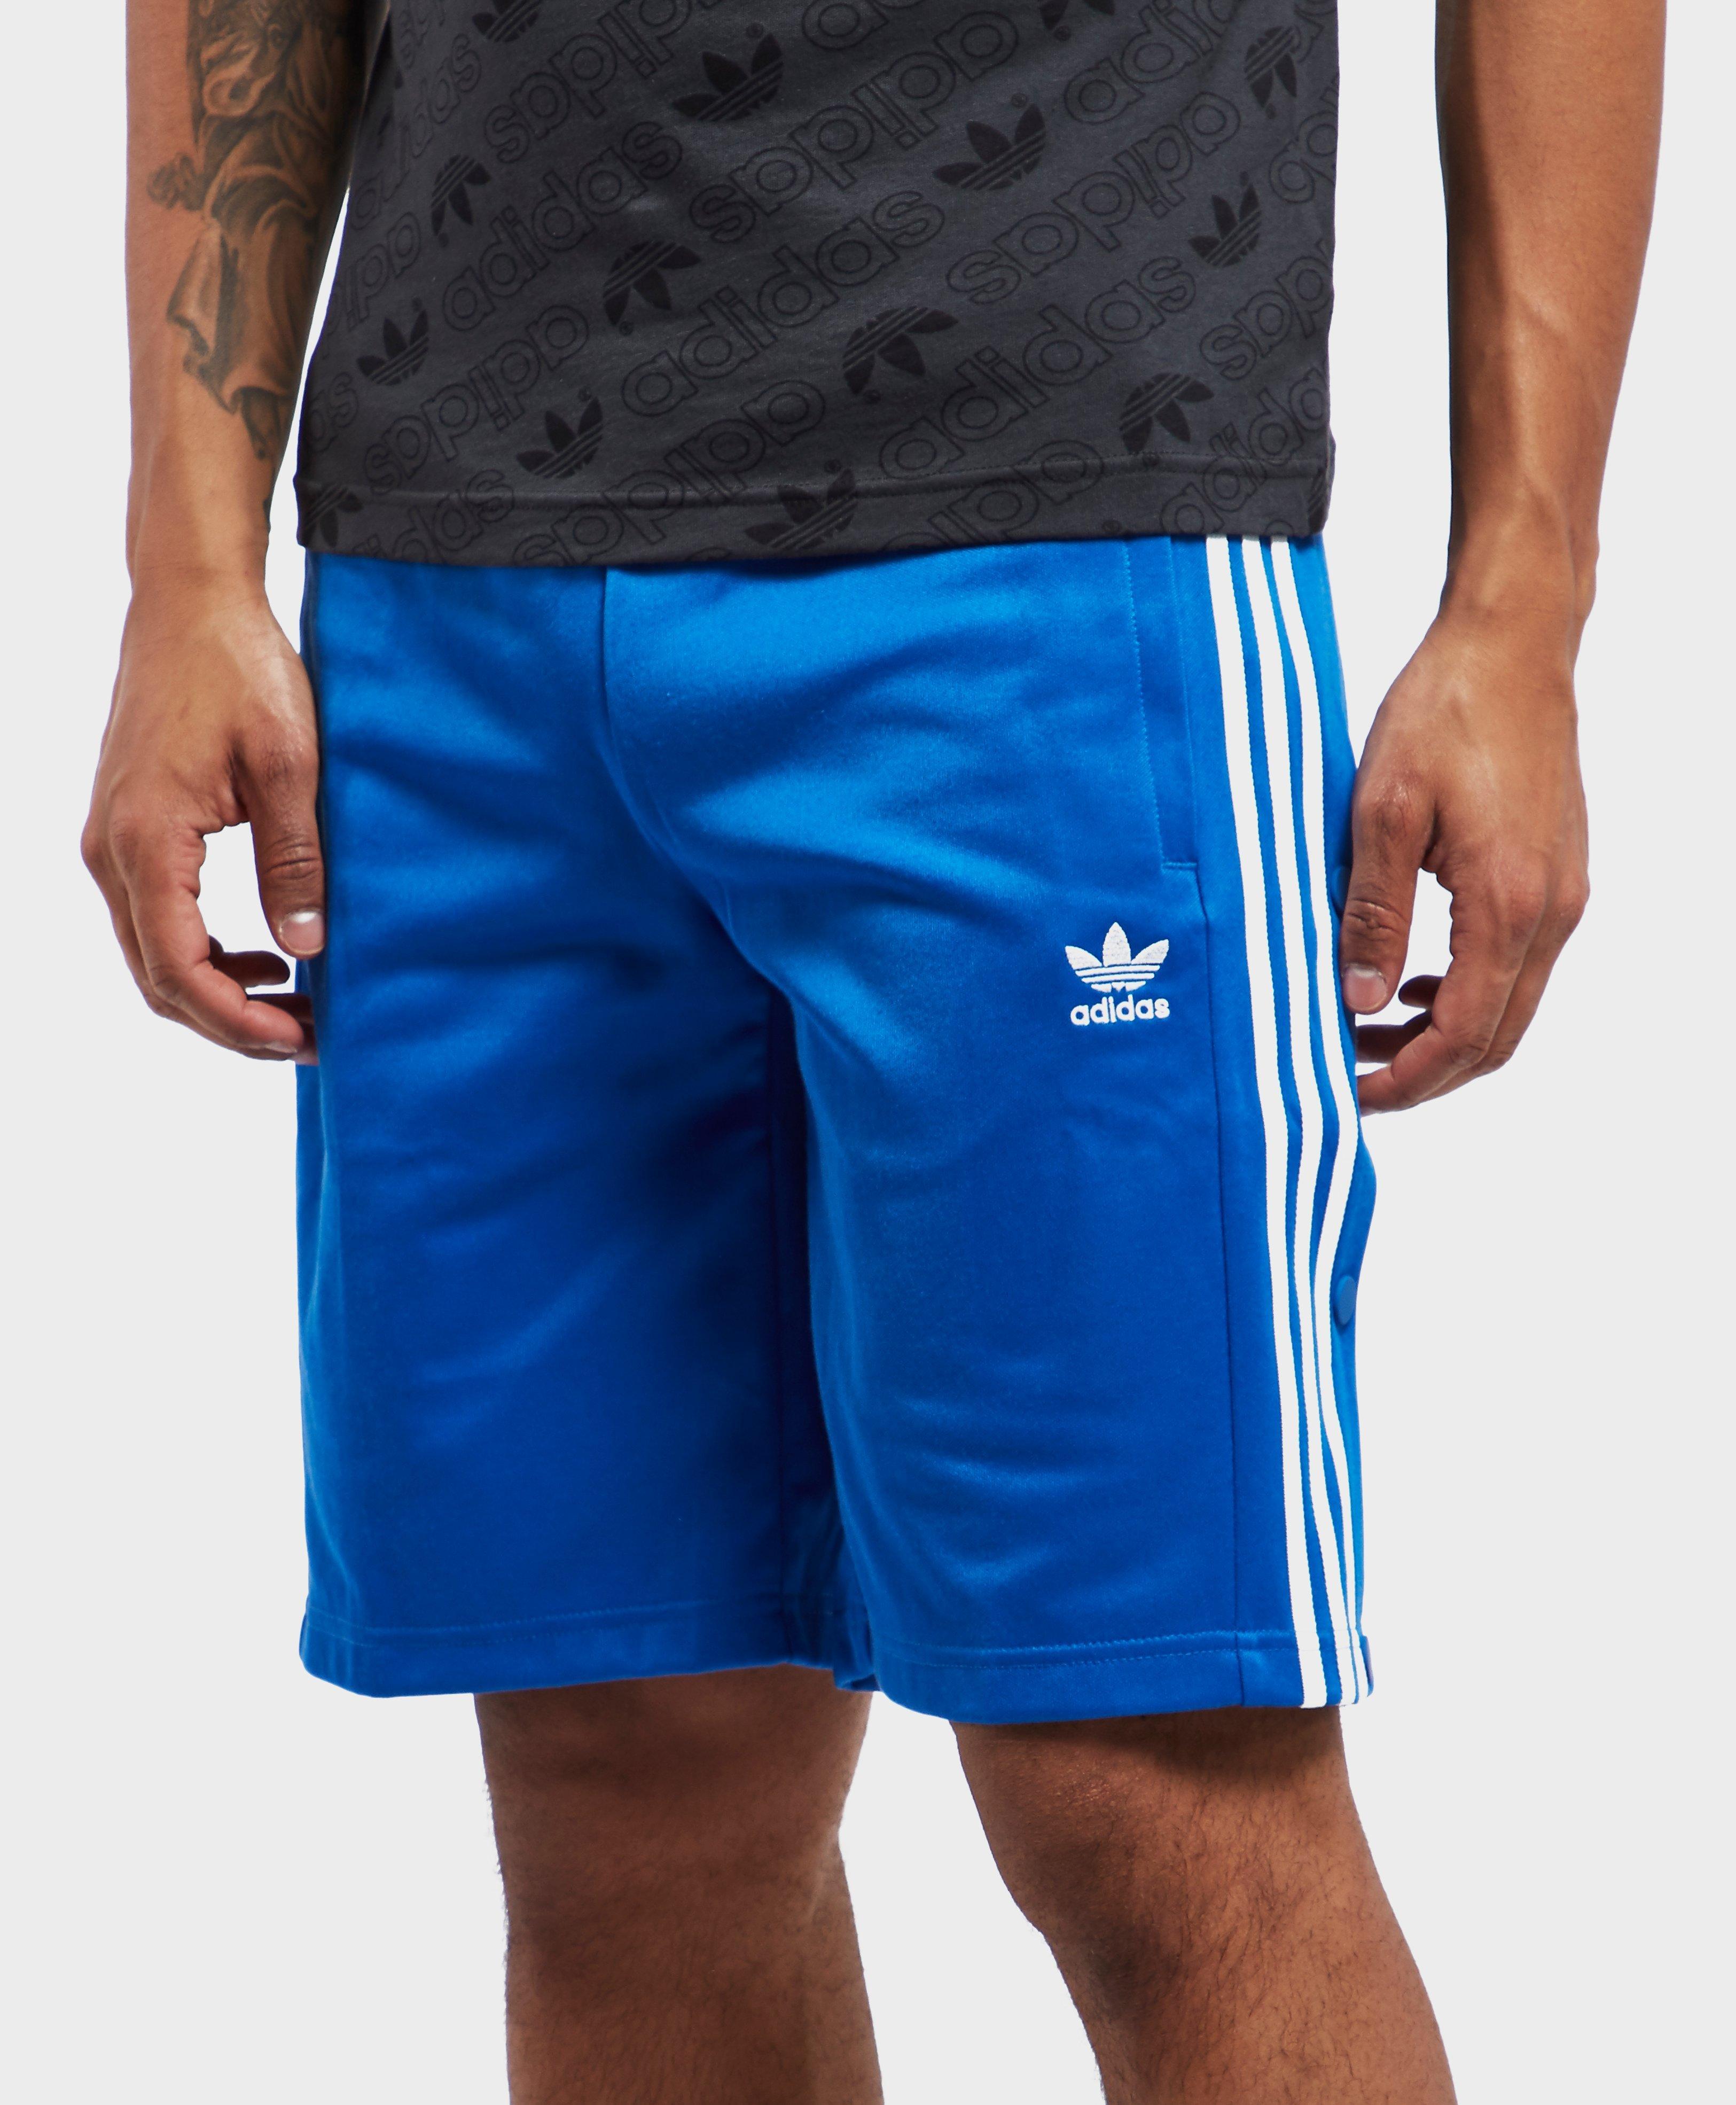 adidas Originals Cotton Snap Button Shorts in Blue for Men - Lyst